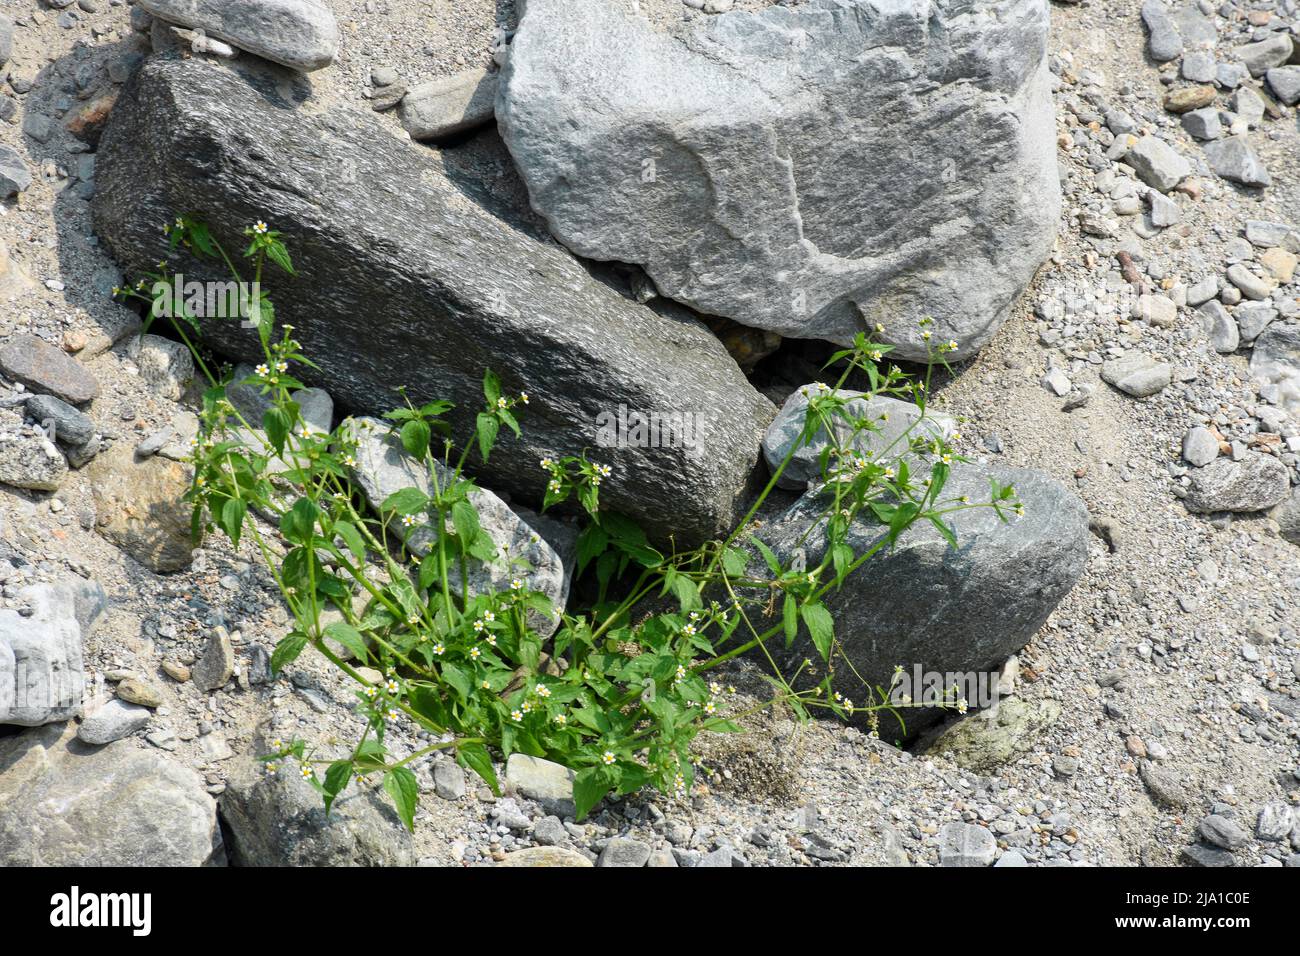 Green River Sage Plant und Himalaya-Bäche mit Felsbrocken Stockfotografie -  Alamy